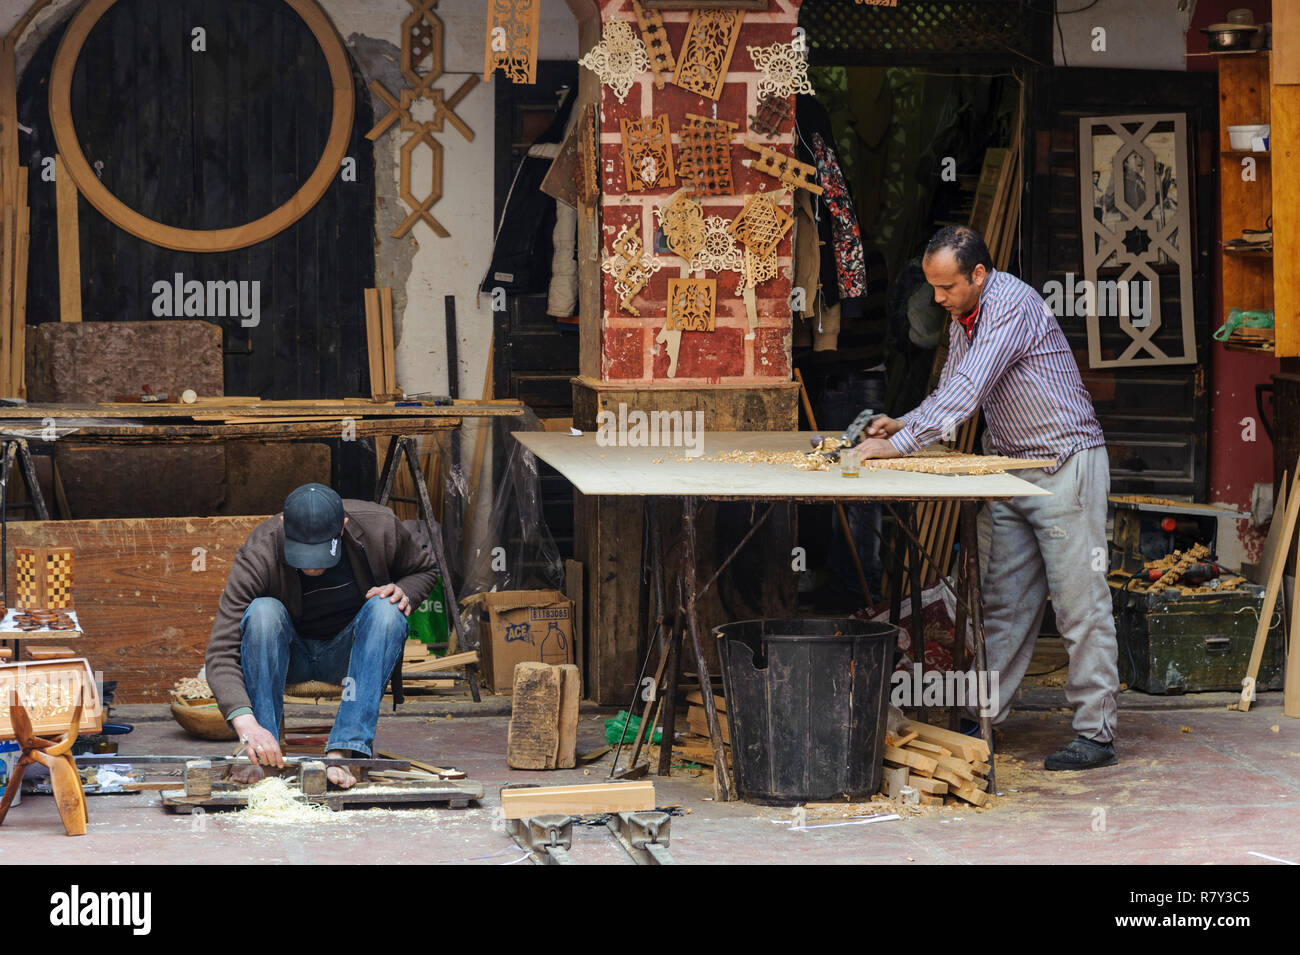 05-03-15, Marrakesch, Marokko. Street Scene im Souk, in der Medina. Tischler, Handwerker bei der Arbeit. Foto: © Simon GrossetPhoto: © Simon Grosset Stockfoto